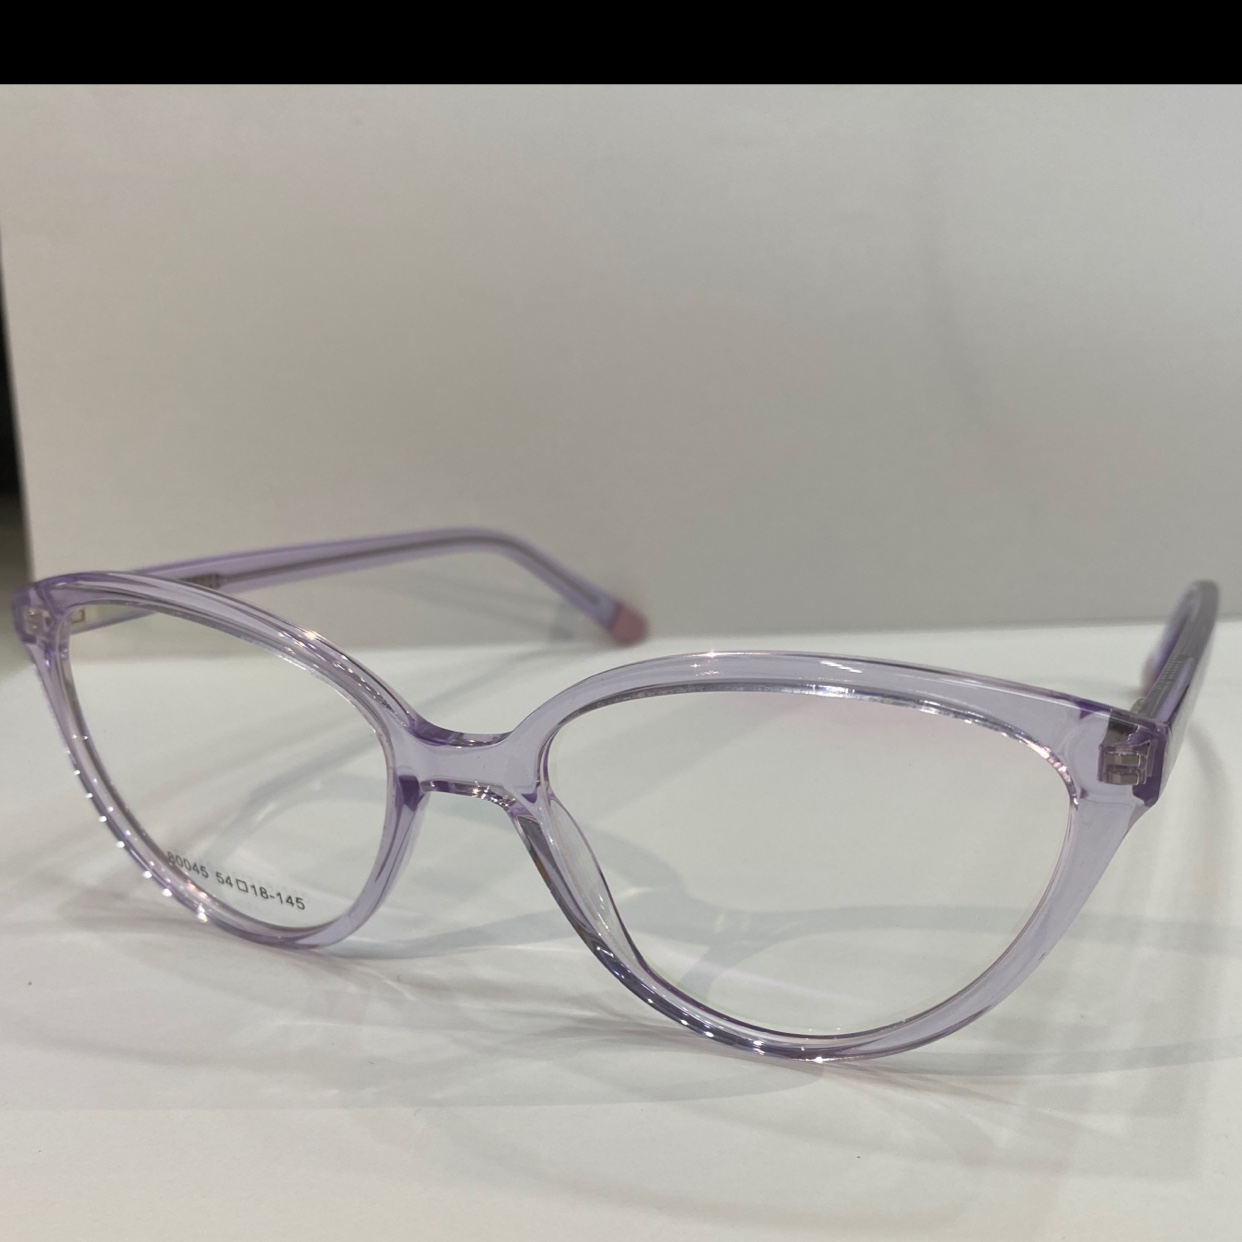 眼镜板材女款紫色Glass plank female style purple
